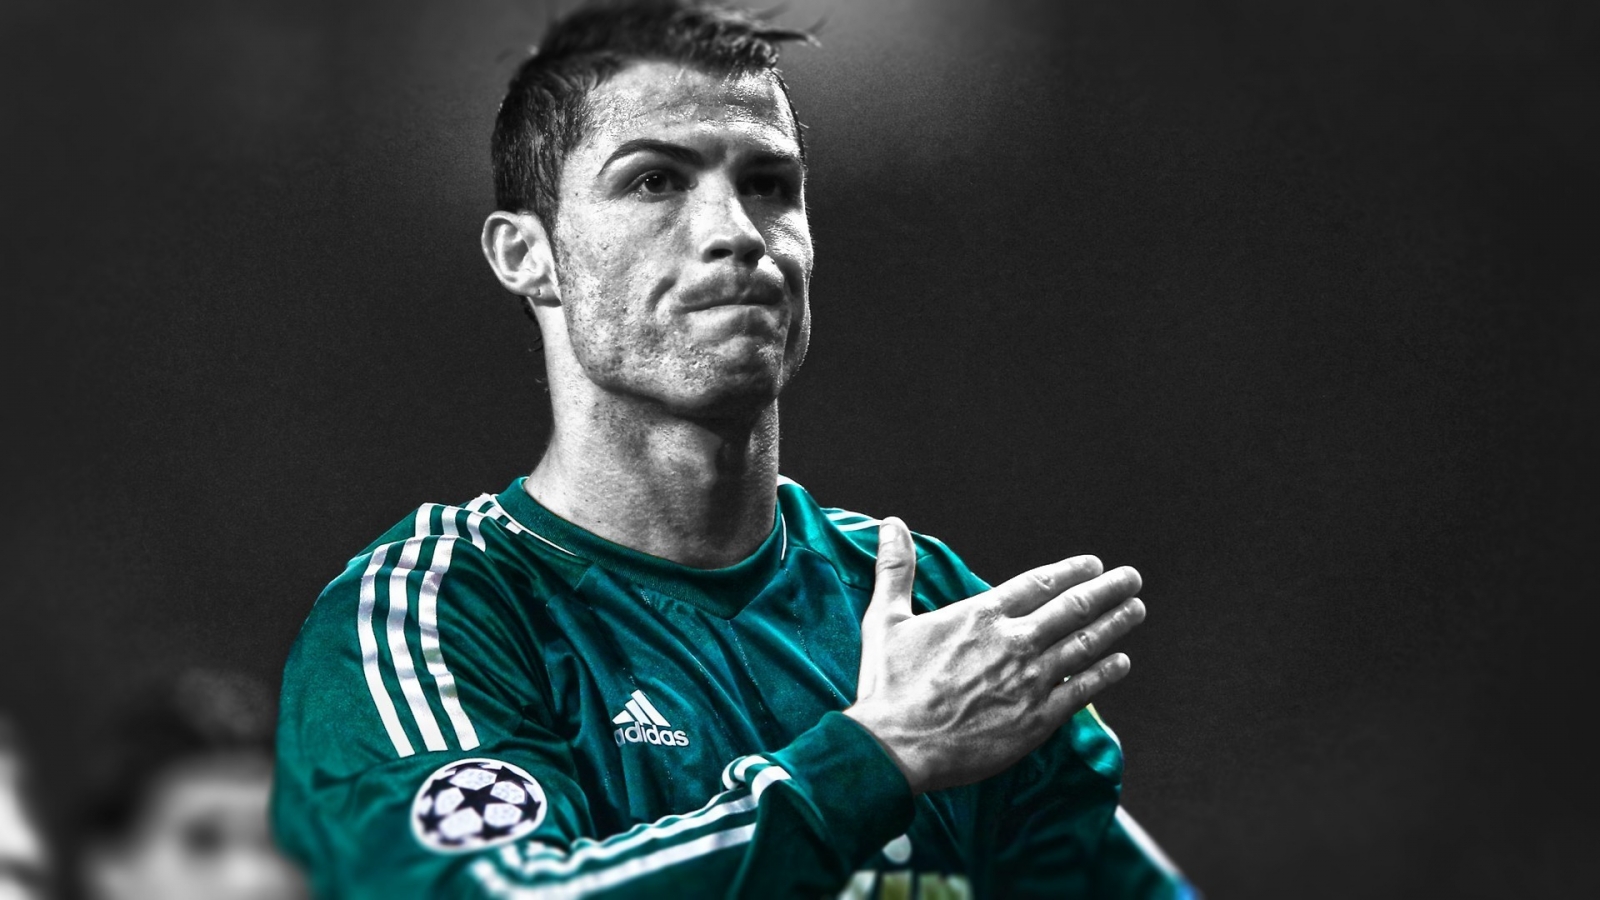 Cristiano Ronaldo Monochrome for 1600 x 900 HDTV resolution